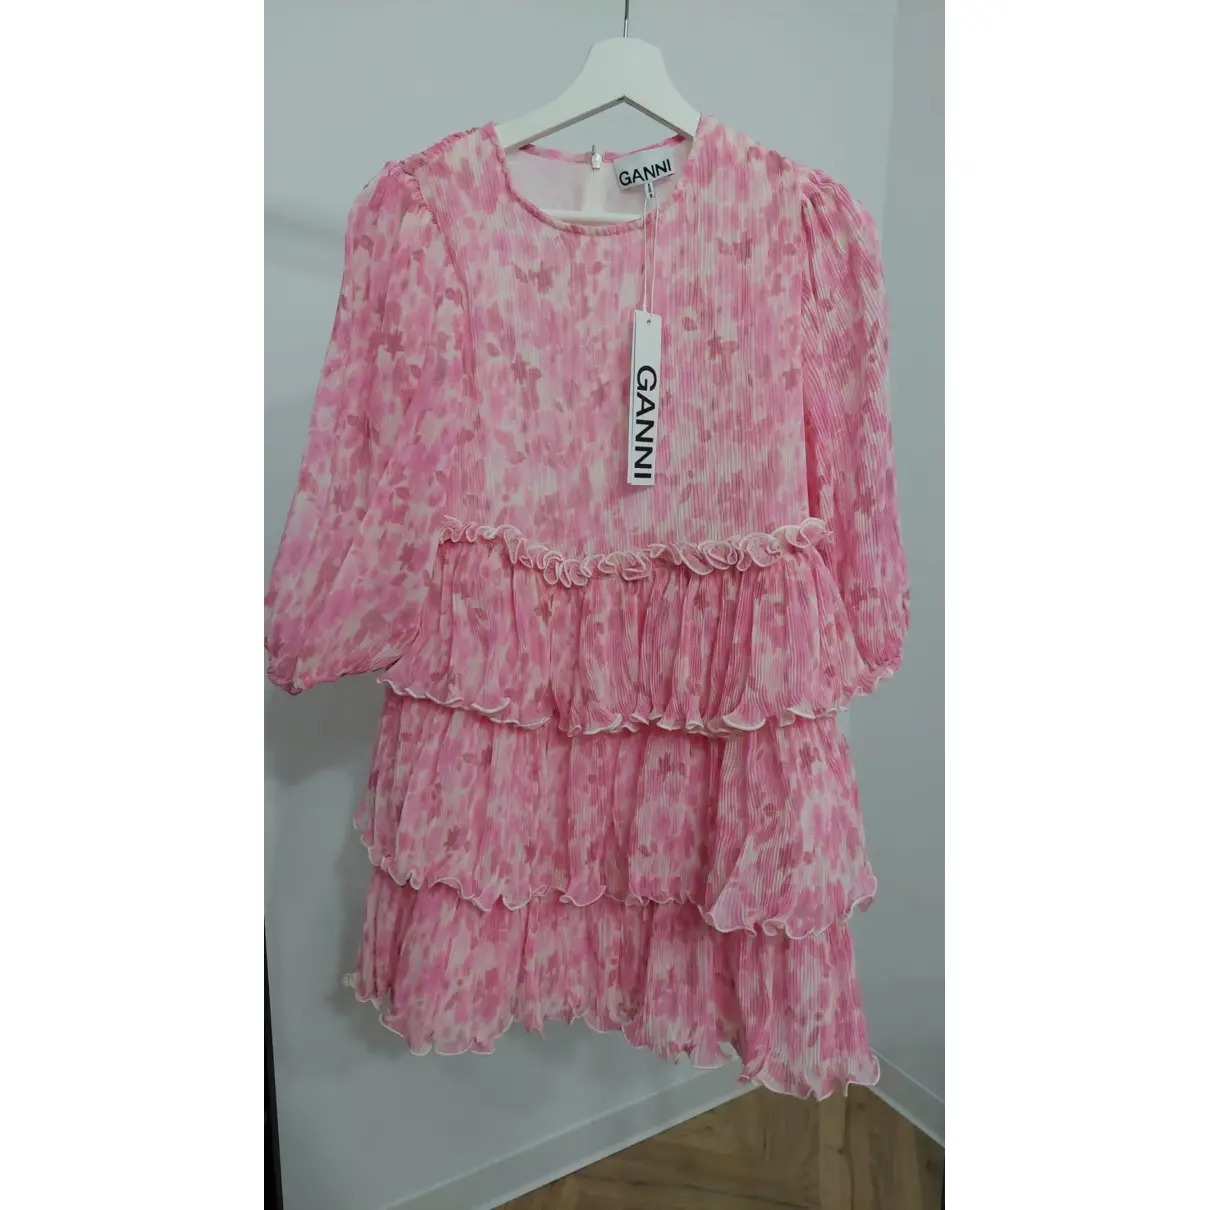 Buy Ganni Spring Summer 2020 mini dress online